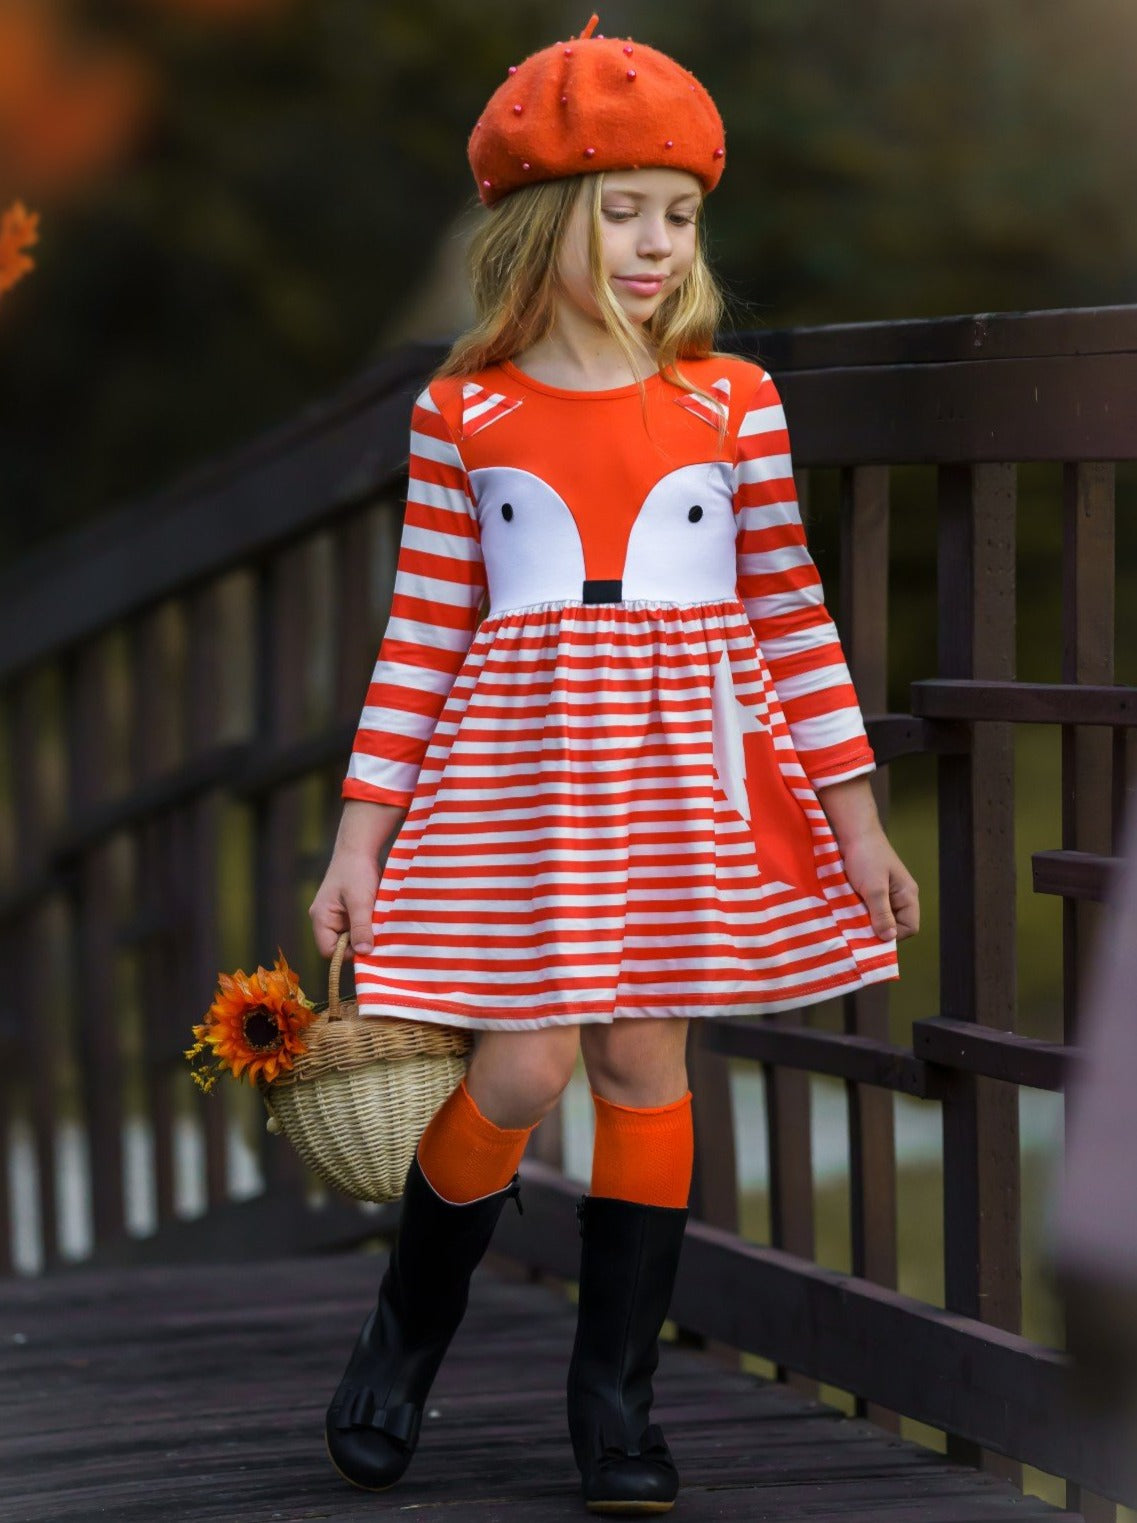 Girls Long Sleeve Striped Fox Dress orange and white